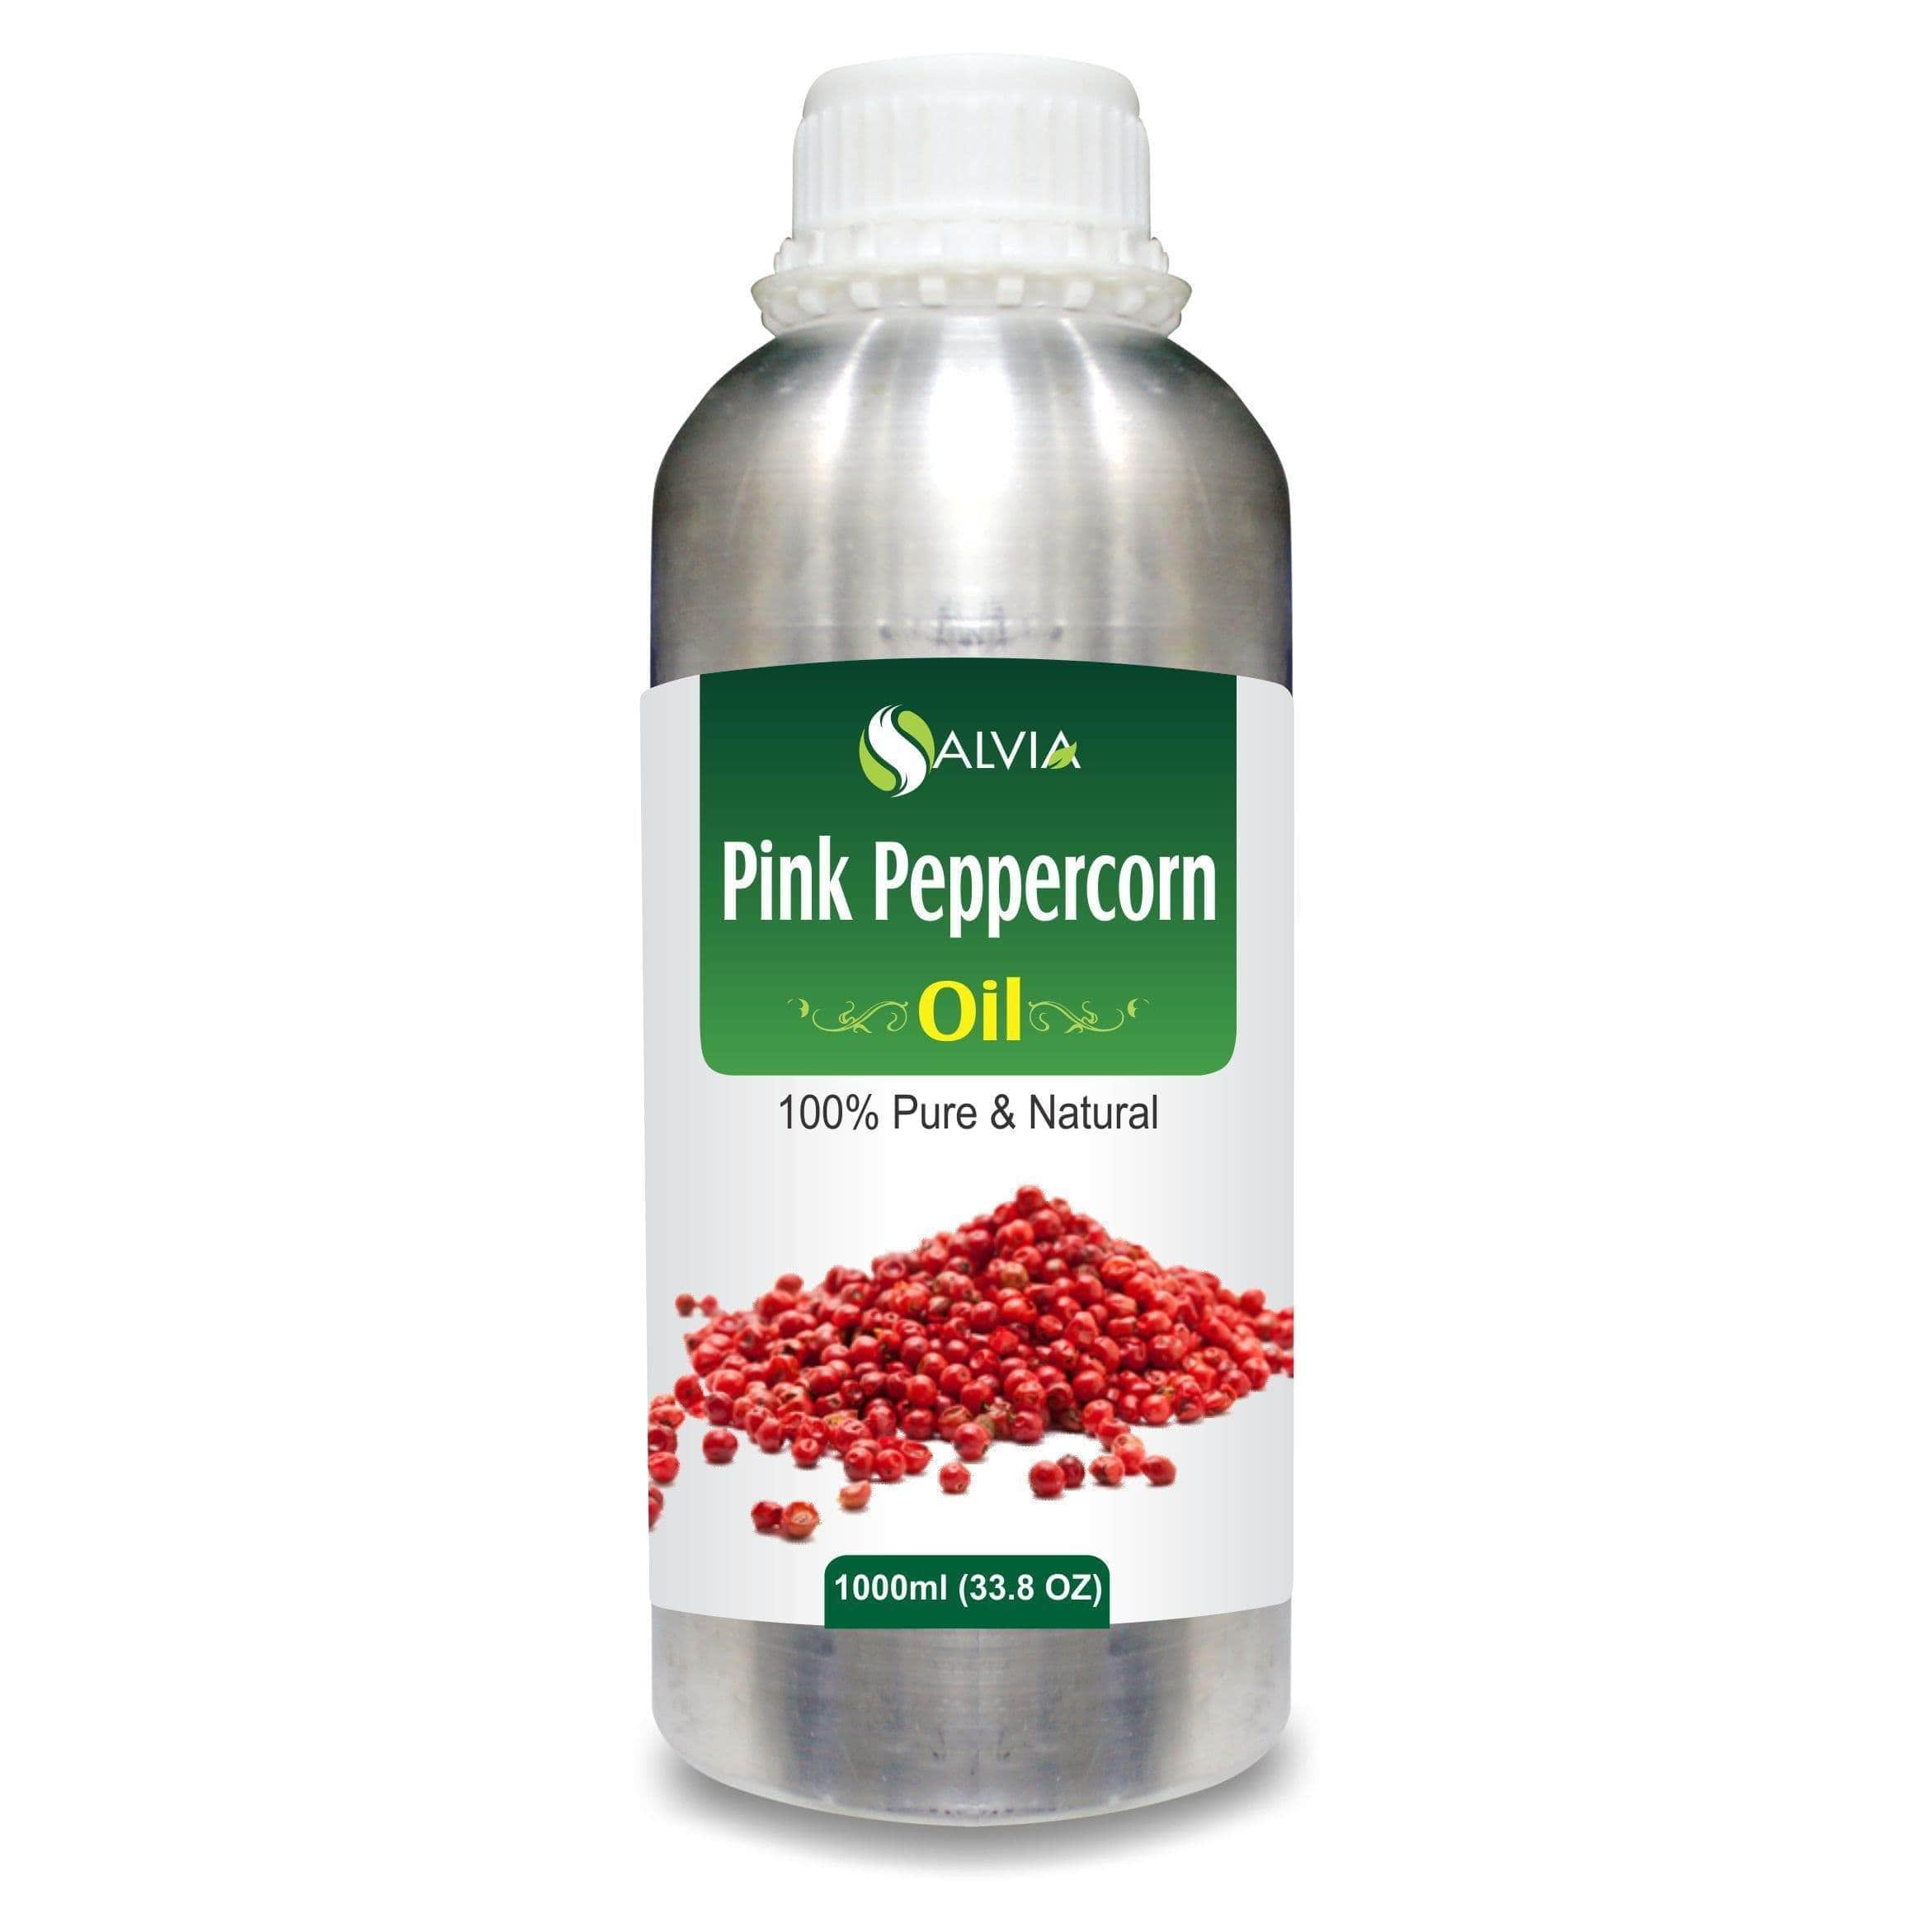  pink peppercorn skin benefits